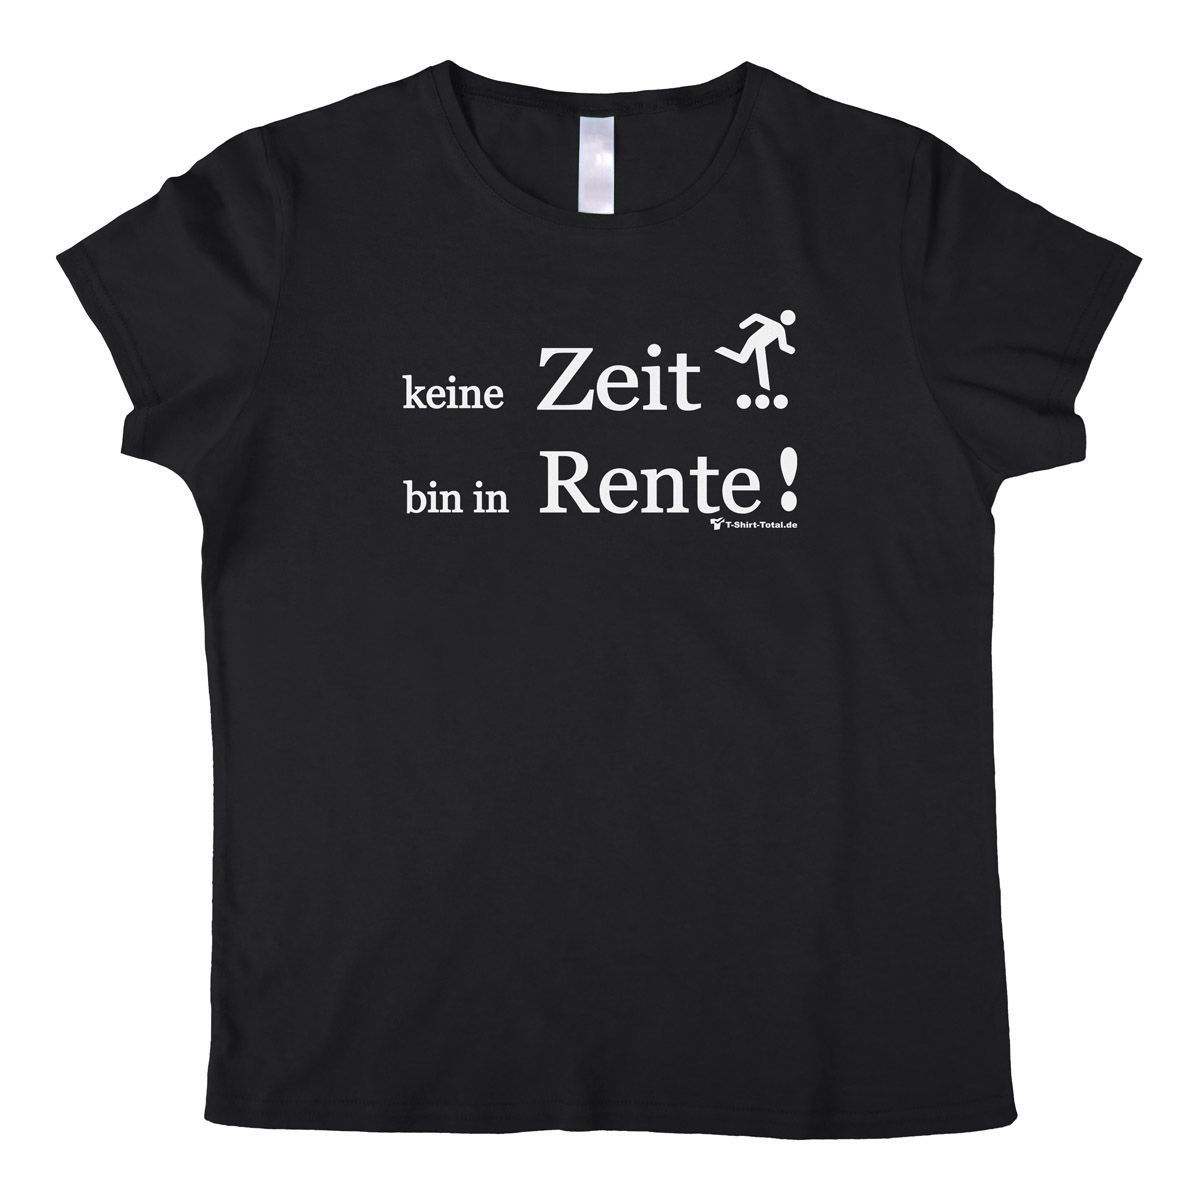 Bin in Rente Woman T-Shirt schwarz Extra Large